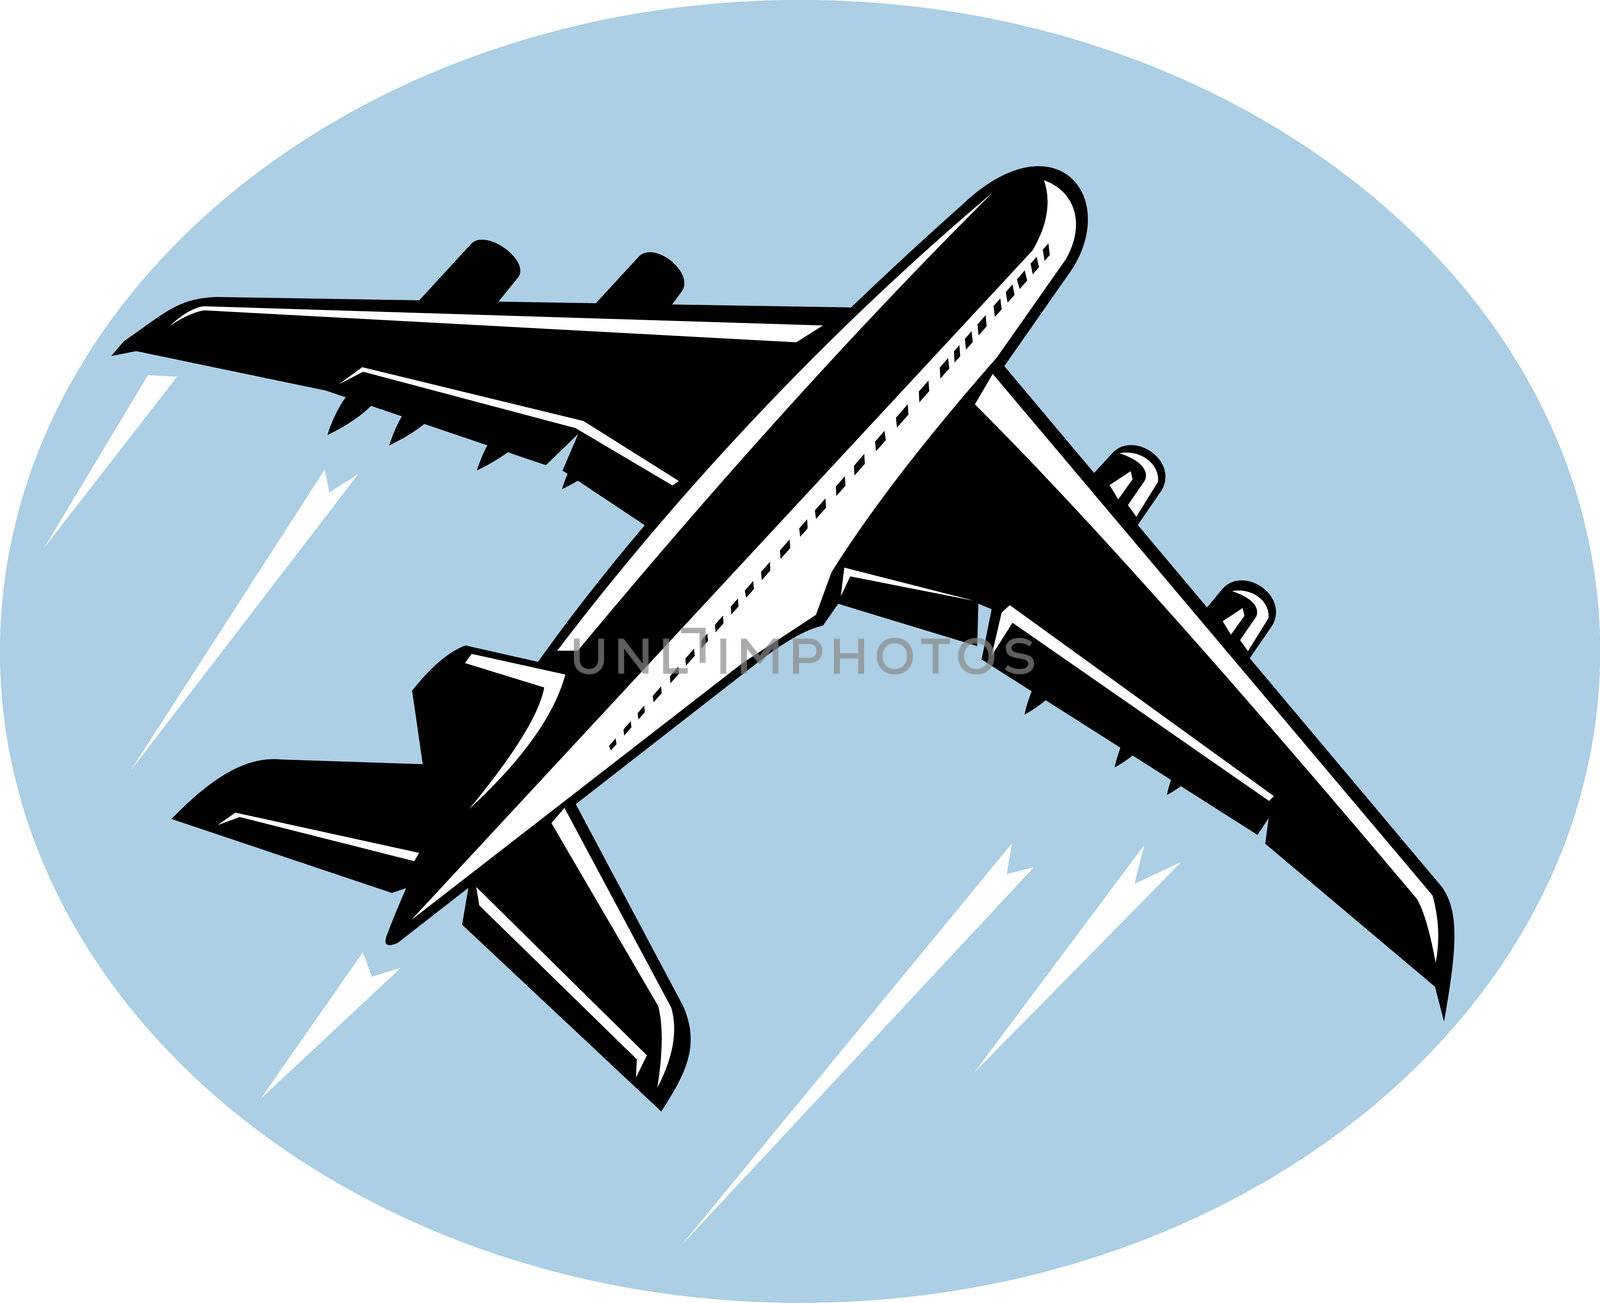 illustration of a Jumbo jet airliner taking off